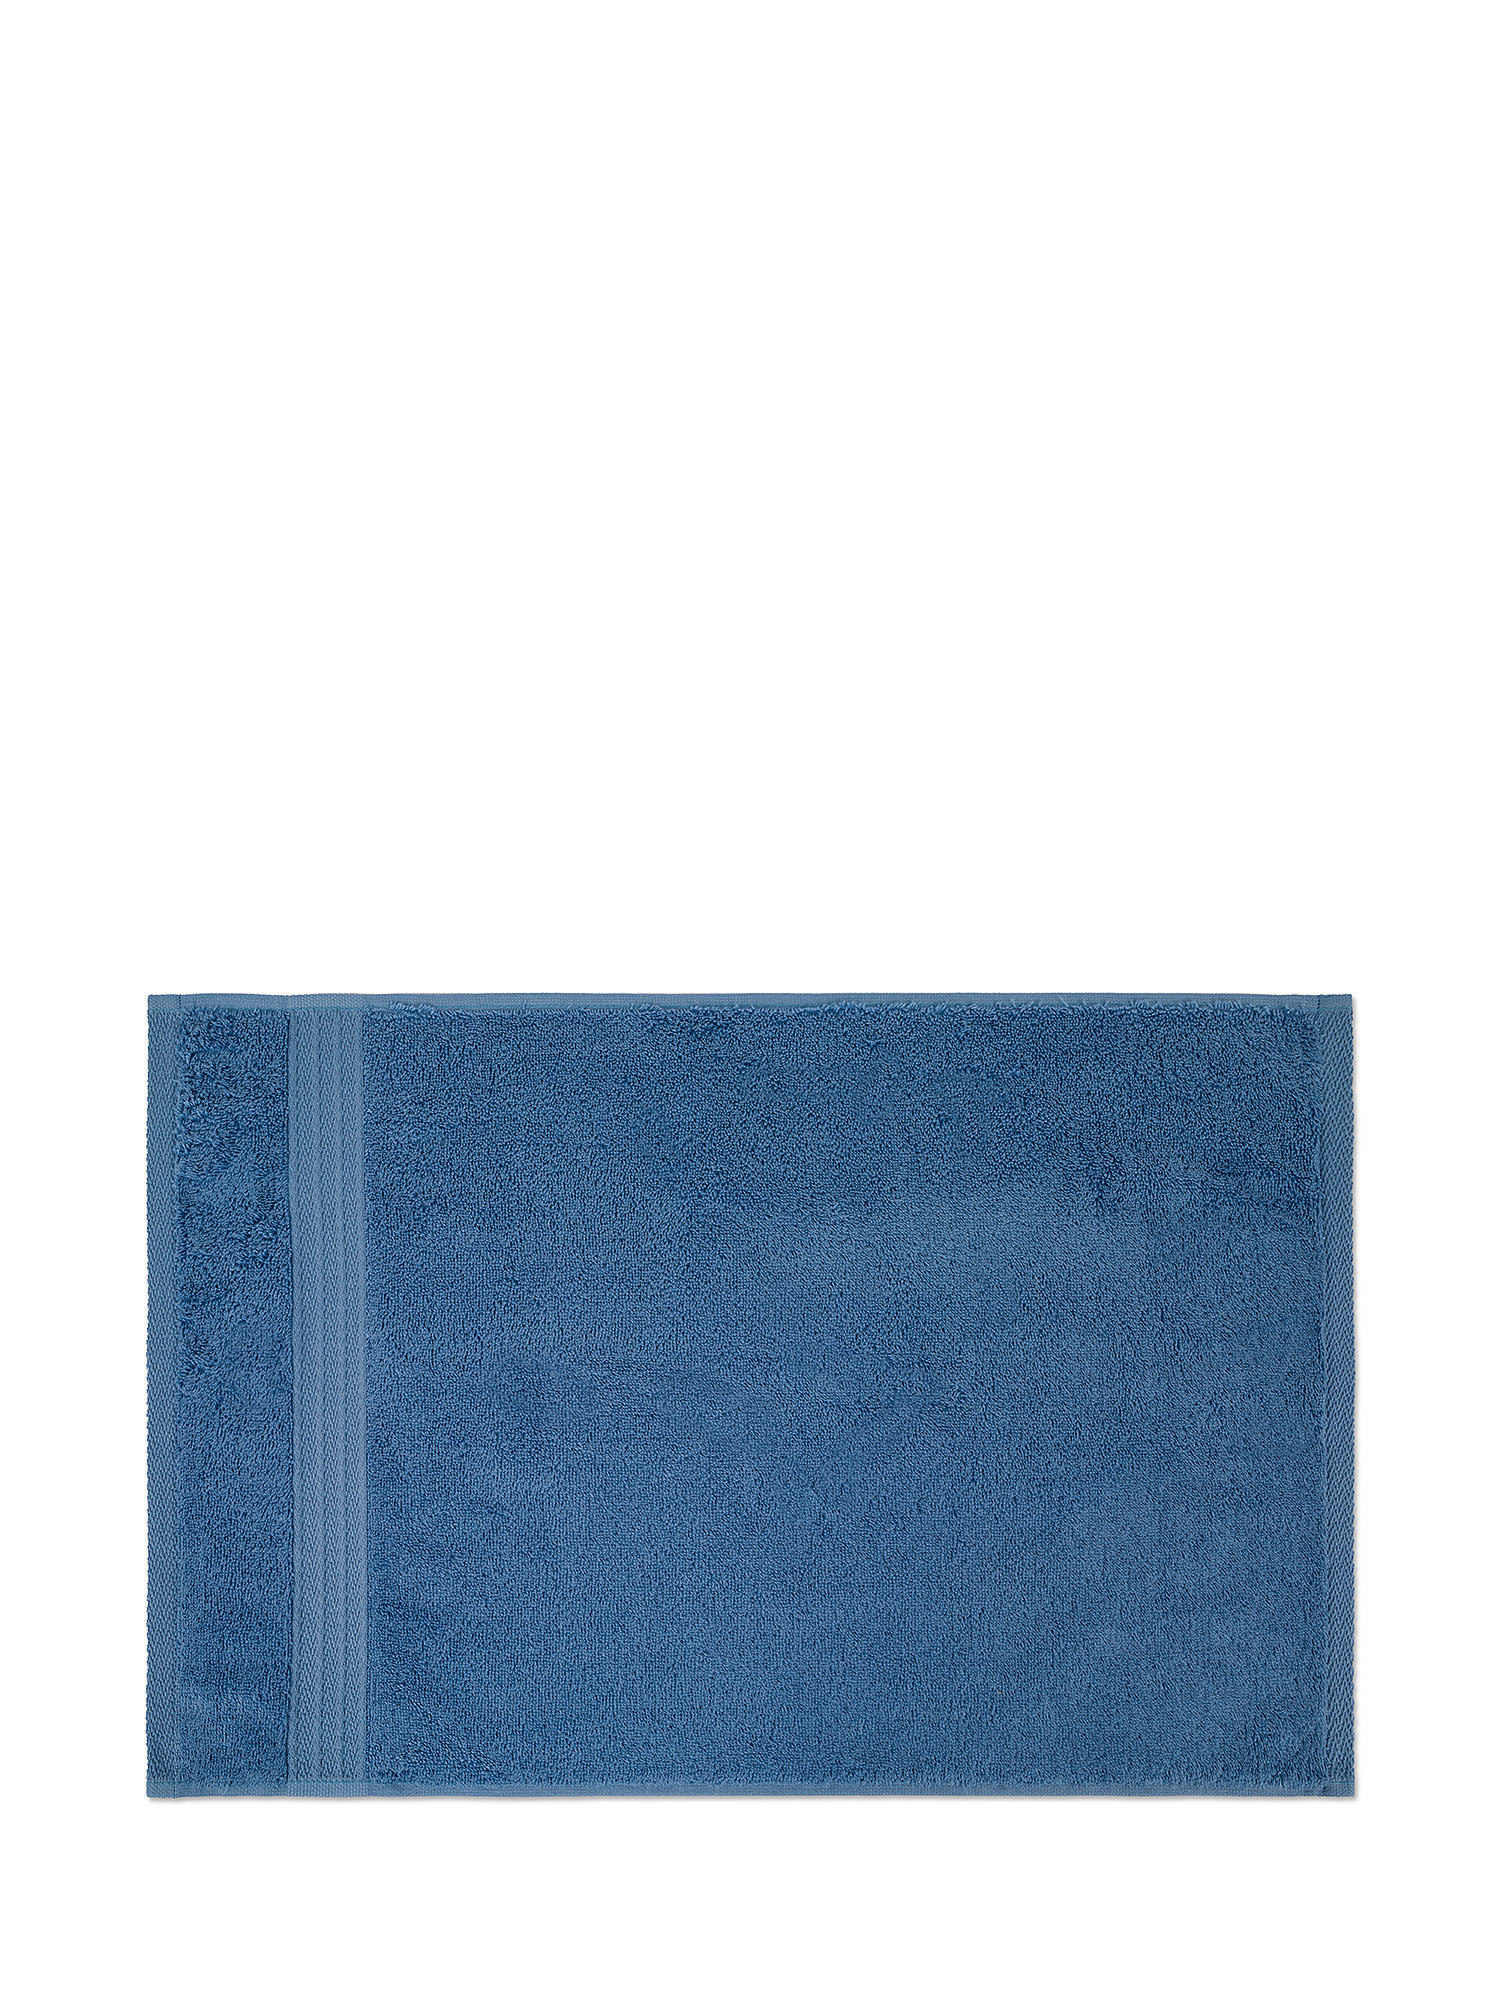 Asciugamano puro cotone tinta unita Zefiro, Azzurro, large image number 1